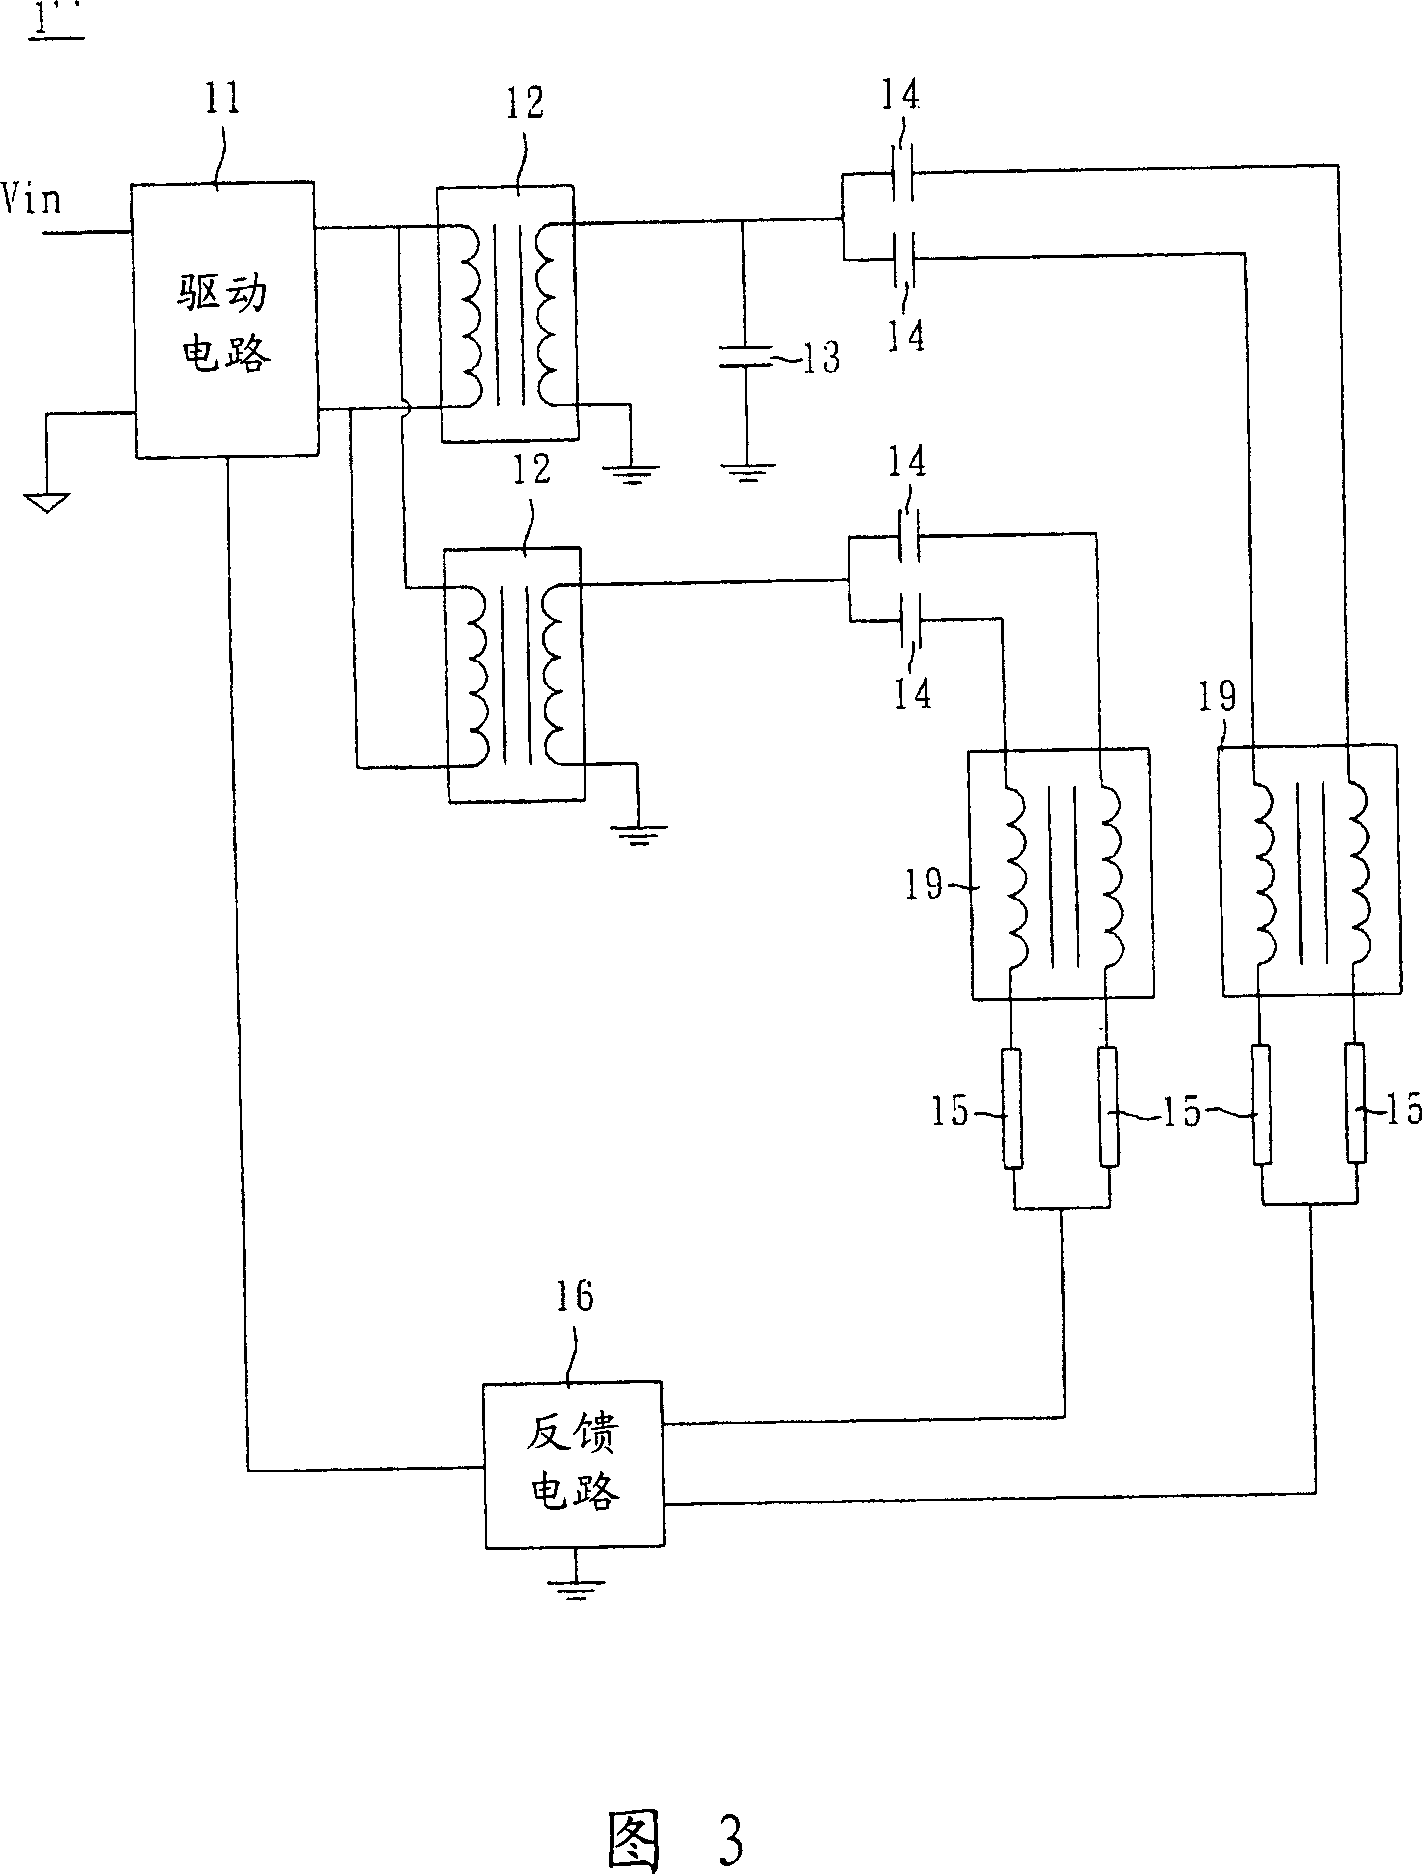 Homogeneous current circuit